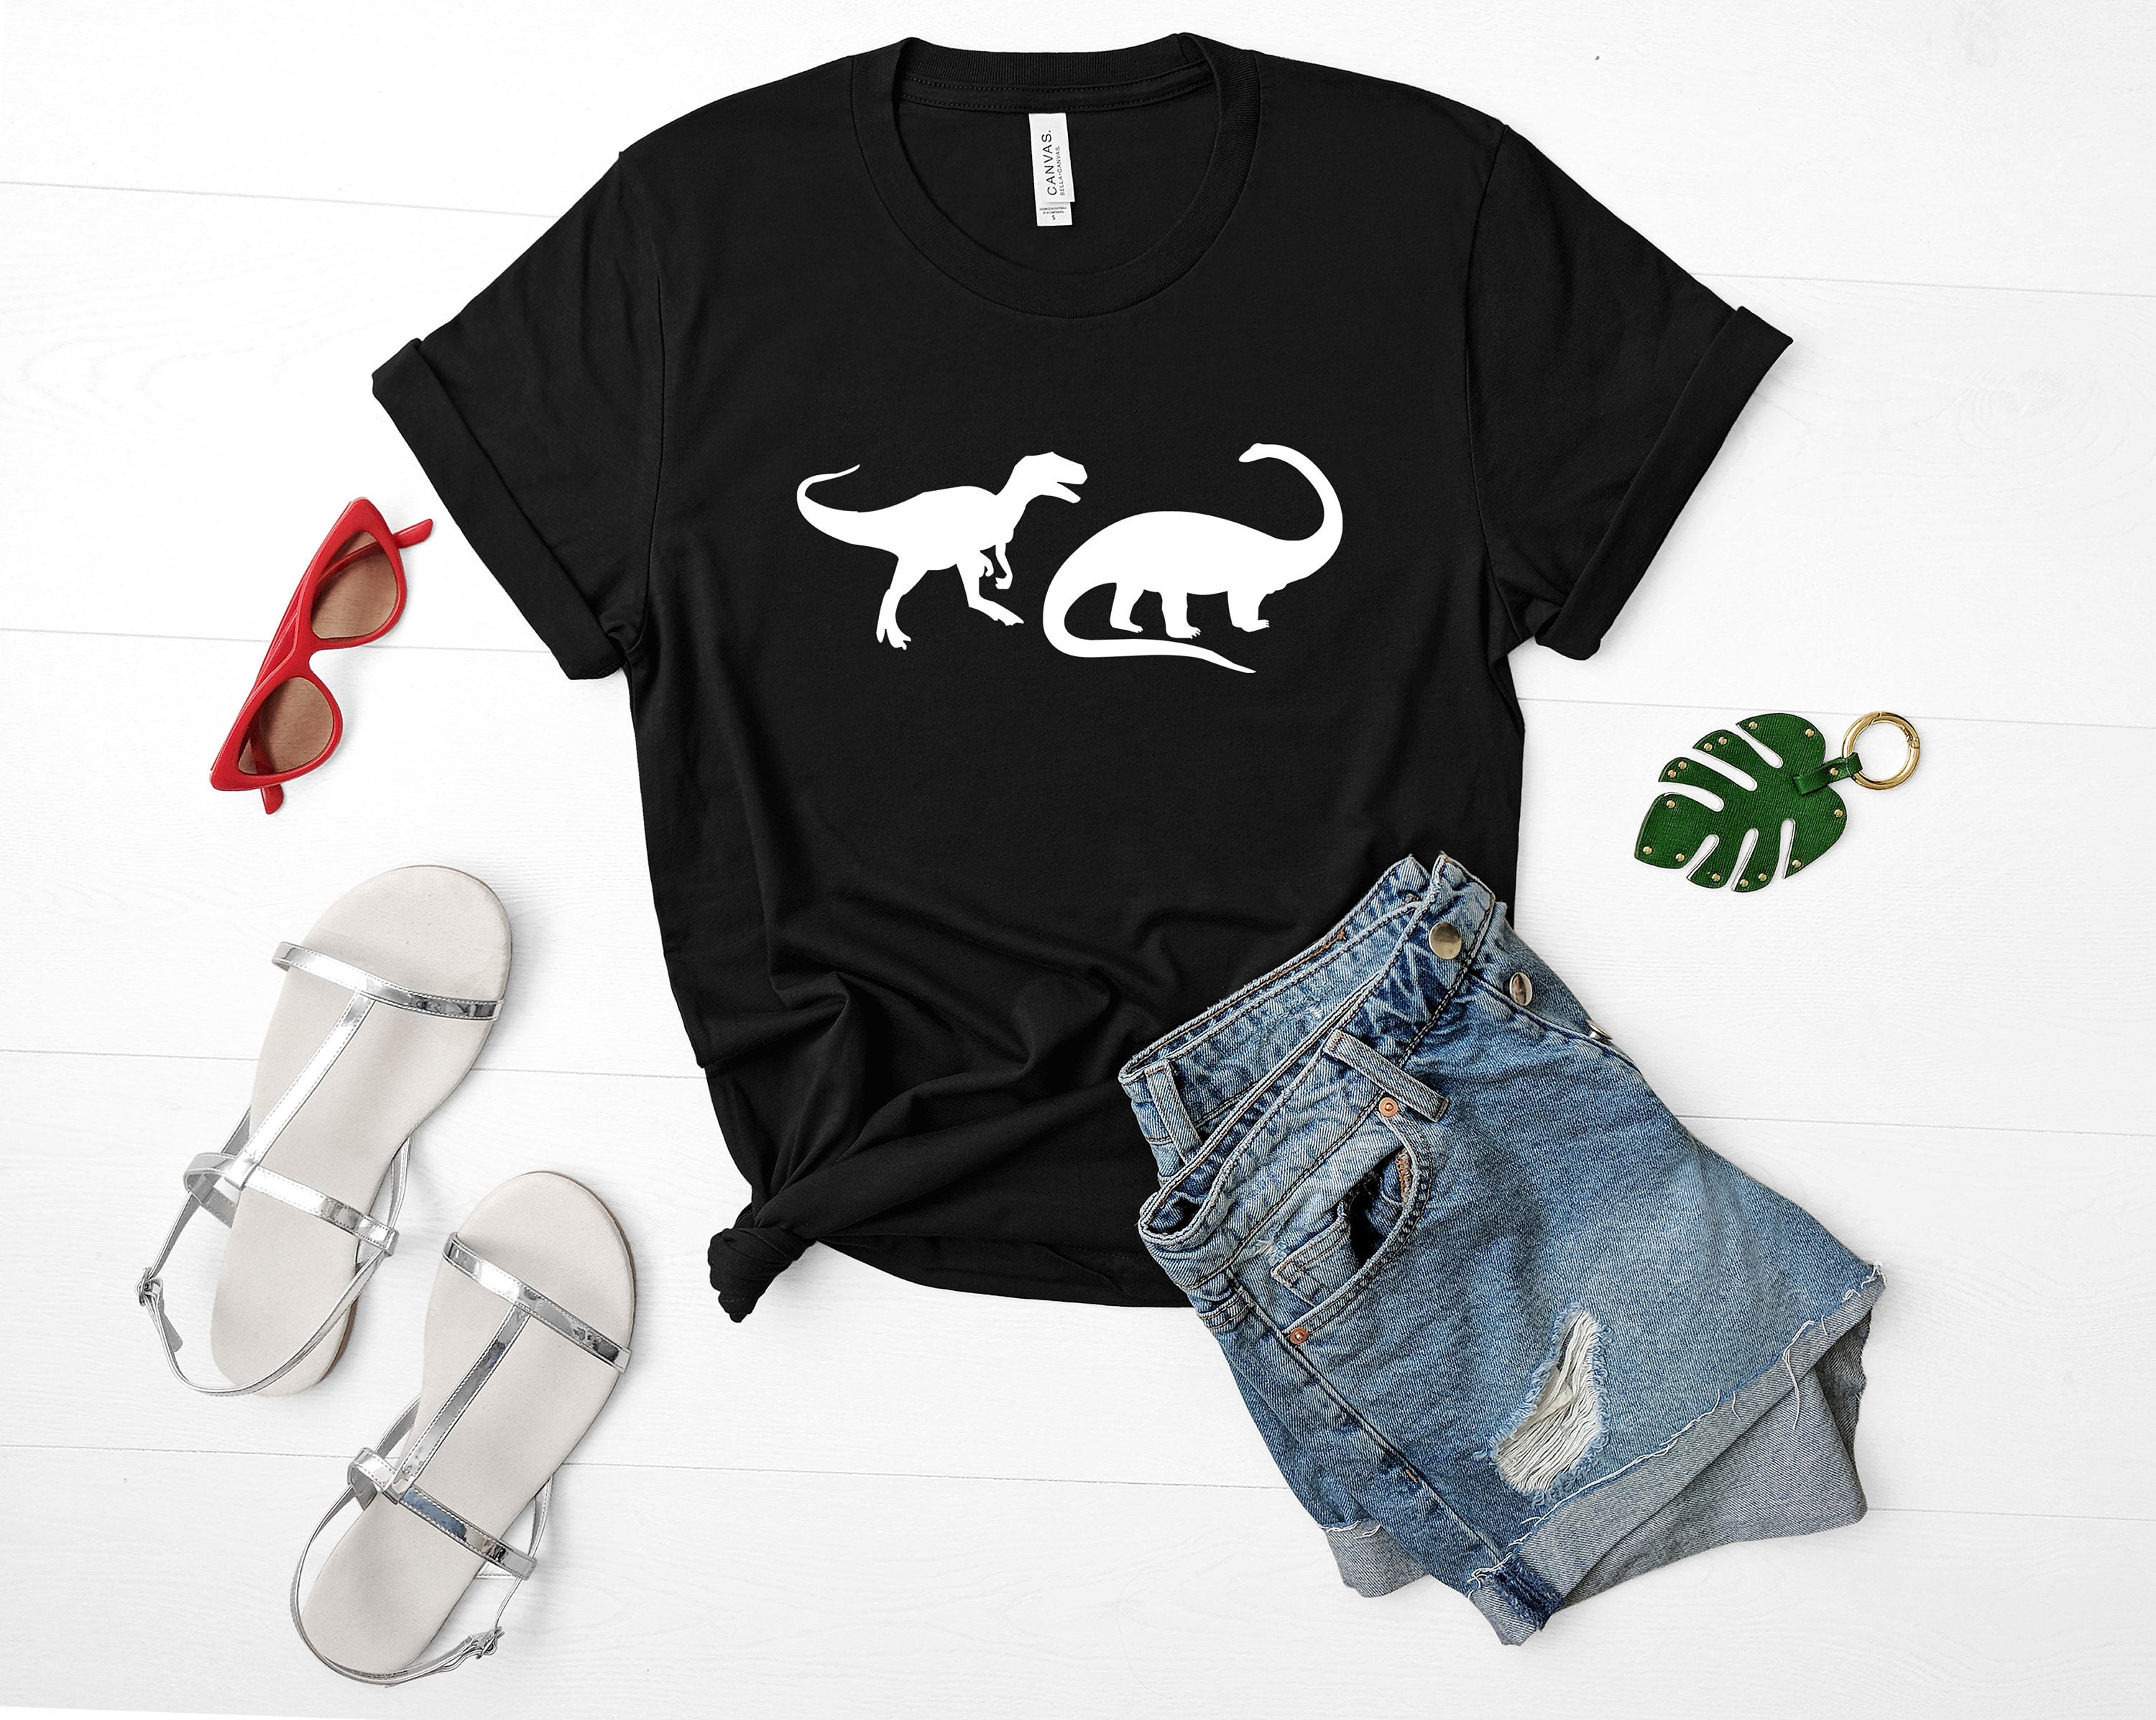 Discover Dinosaur Shirt T-rex Dinosaur tshirt Dinosaur lover gift for Men Women Brontosaurus Dinosaur Tee - 1742